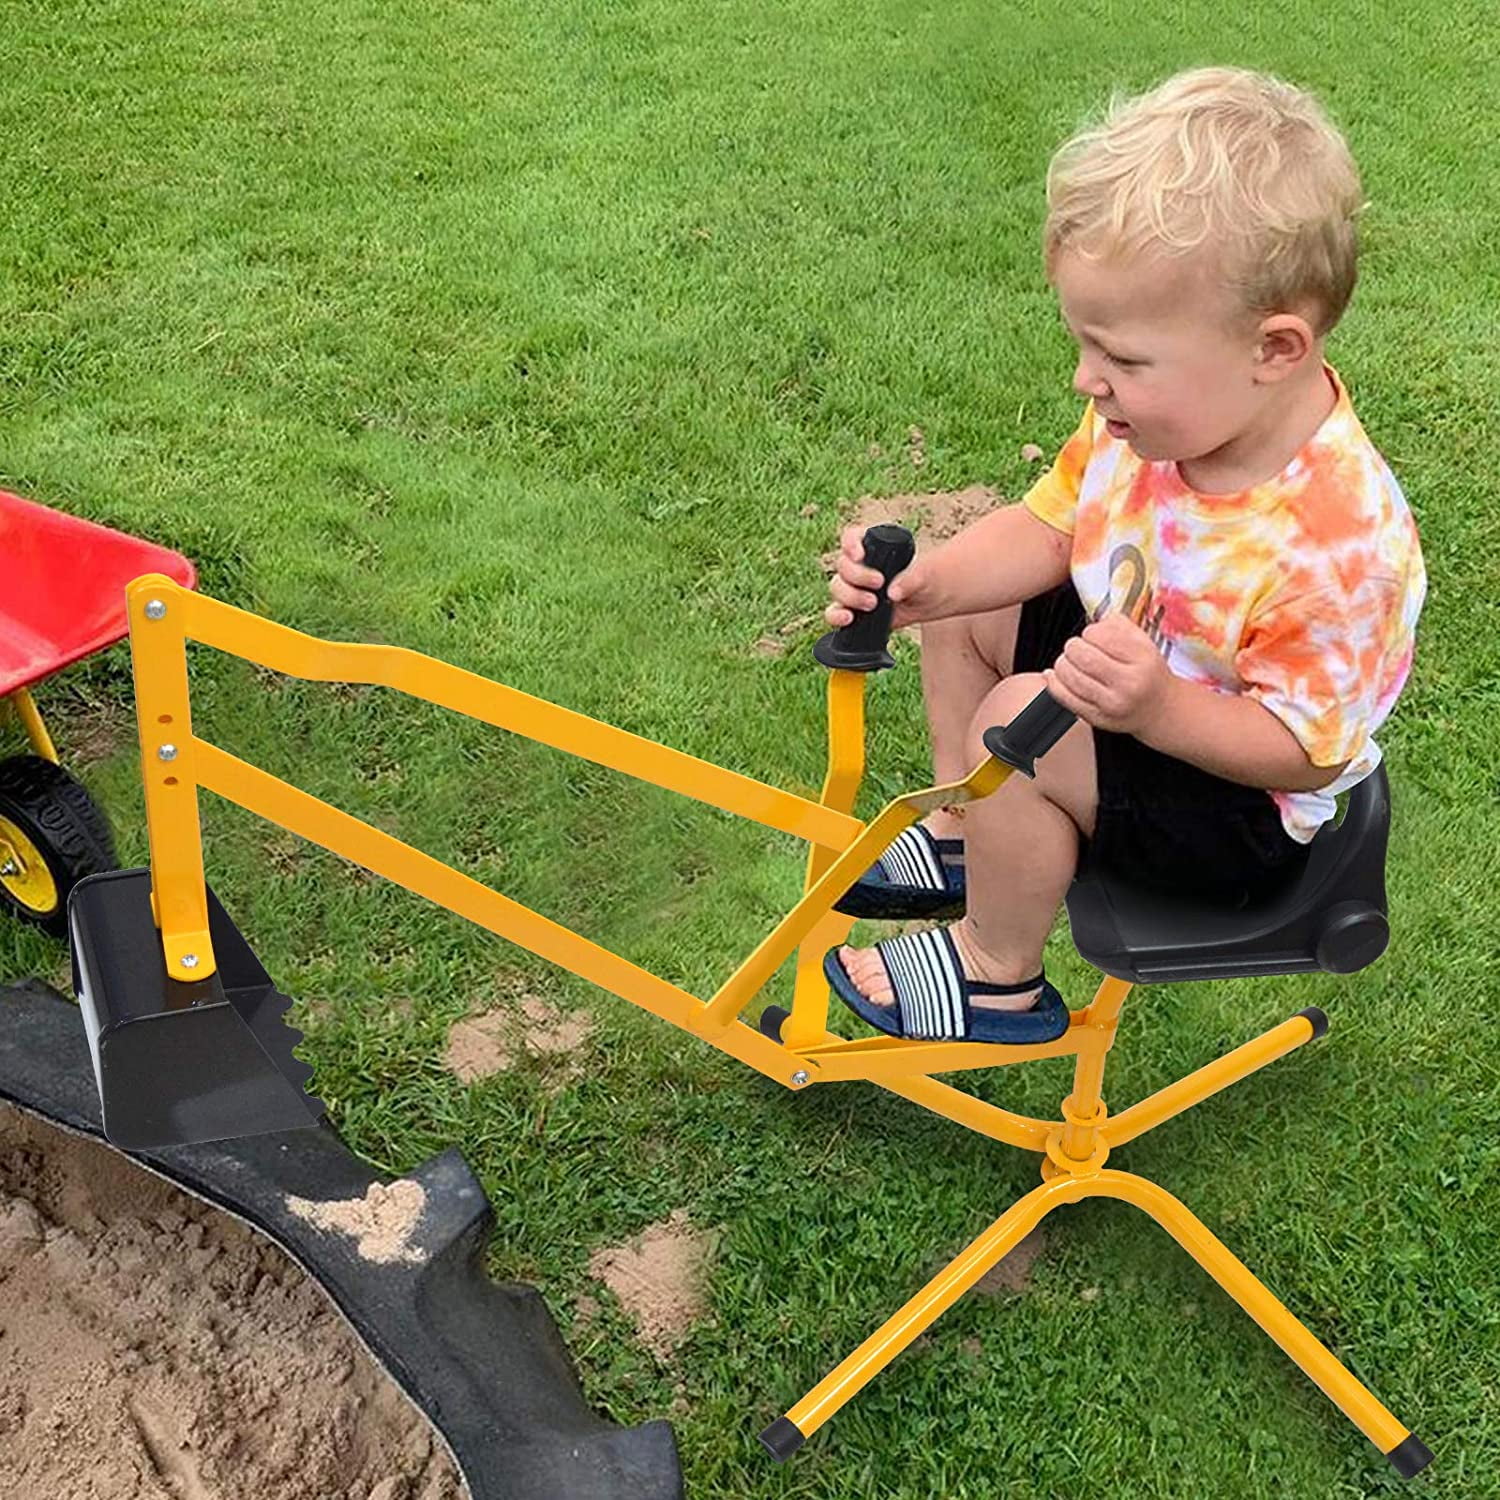 Working Crane Set Toy Yard Outdoor Sand Digger Dig Kid Child Beach Play Ride